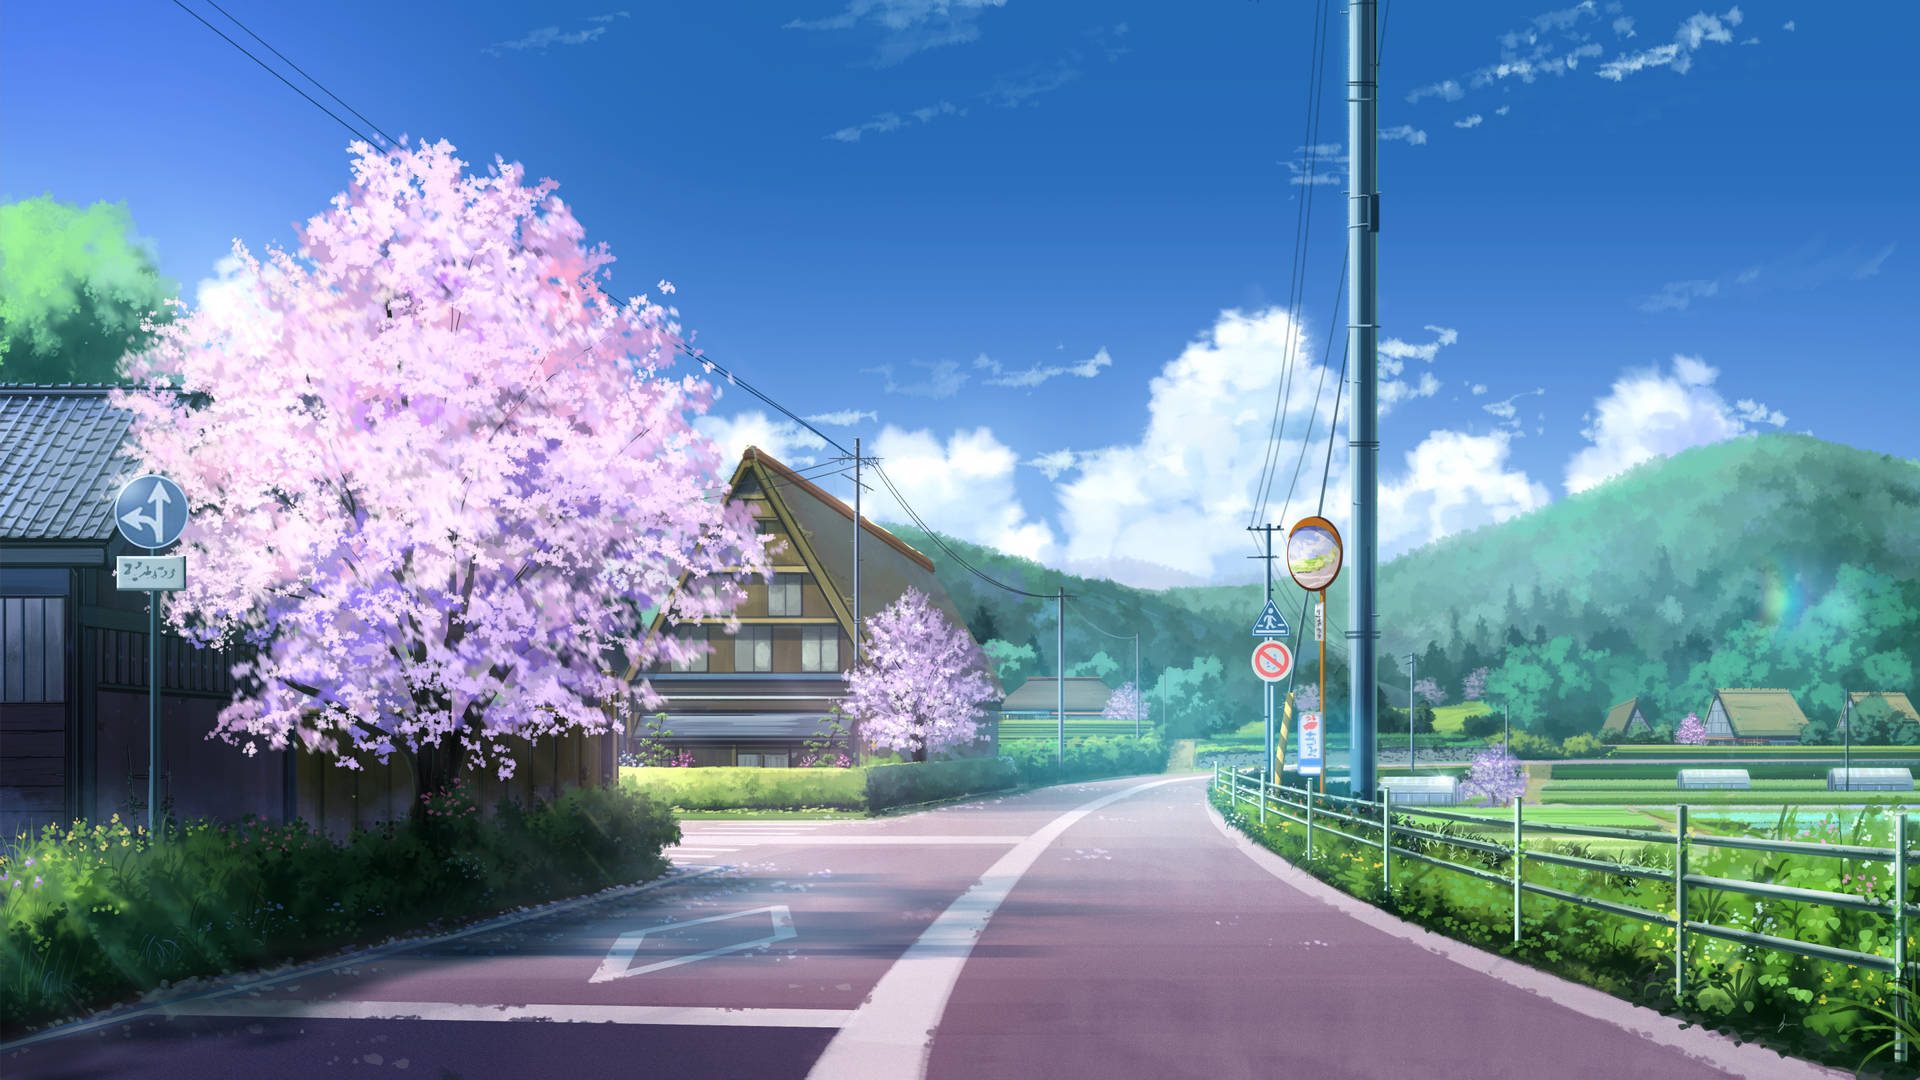 Countryside Scenery Anime 4k Wallpaper